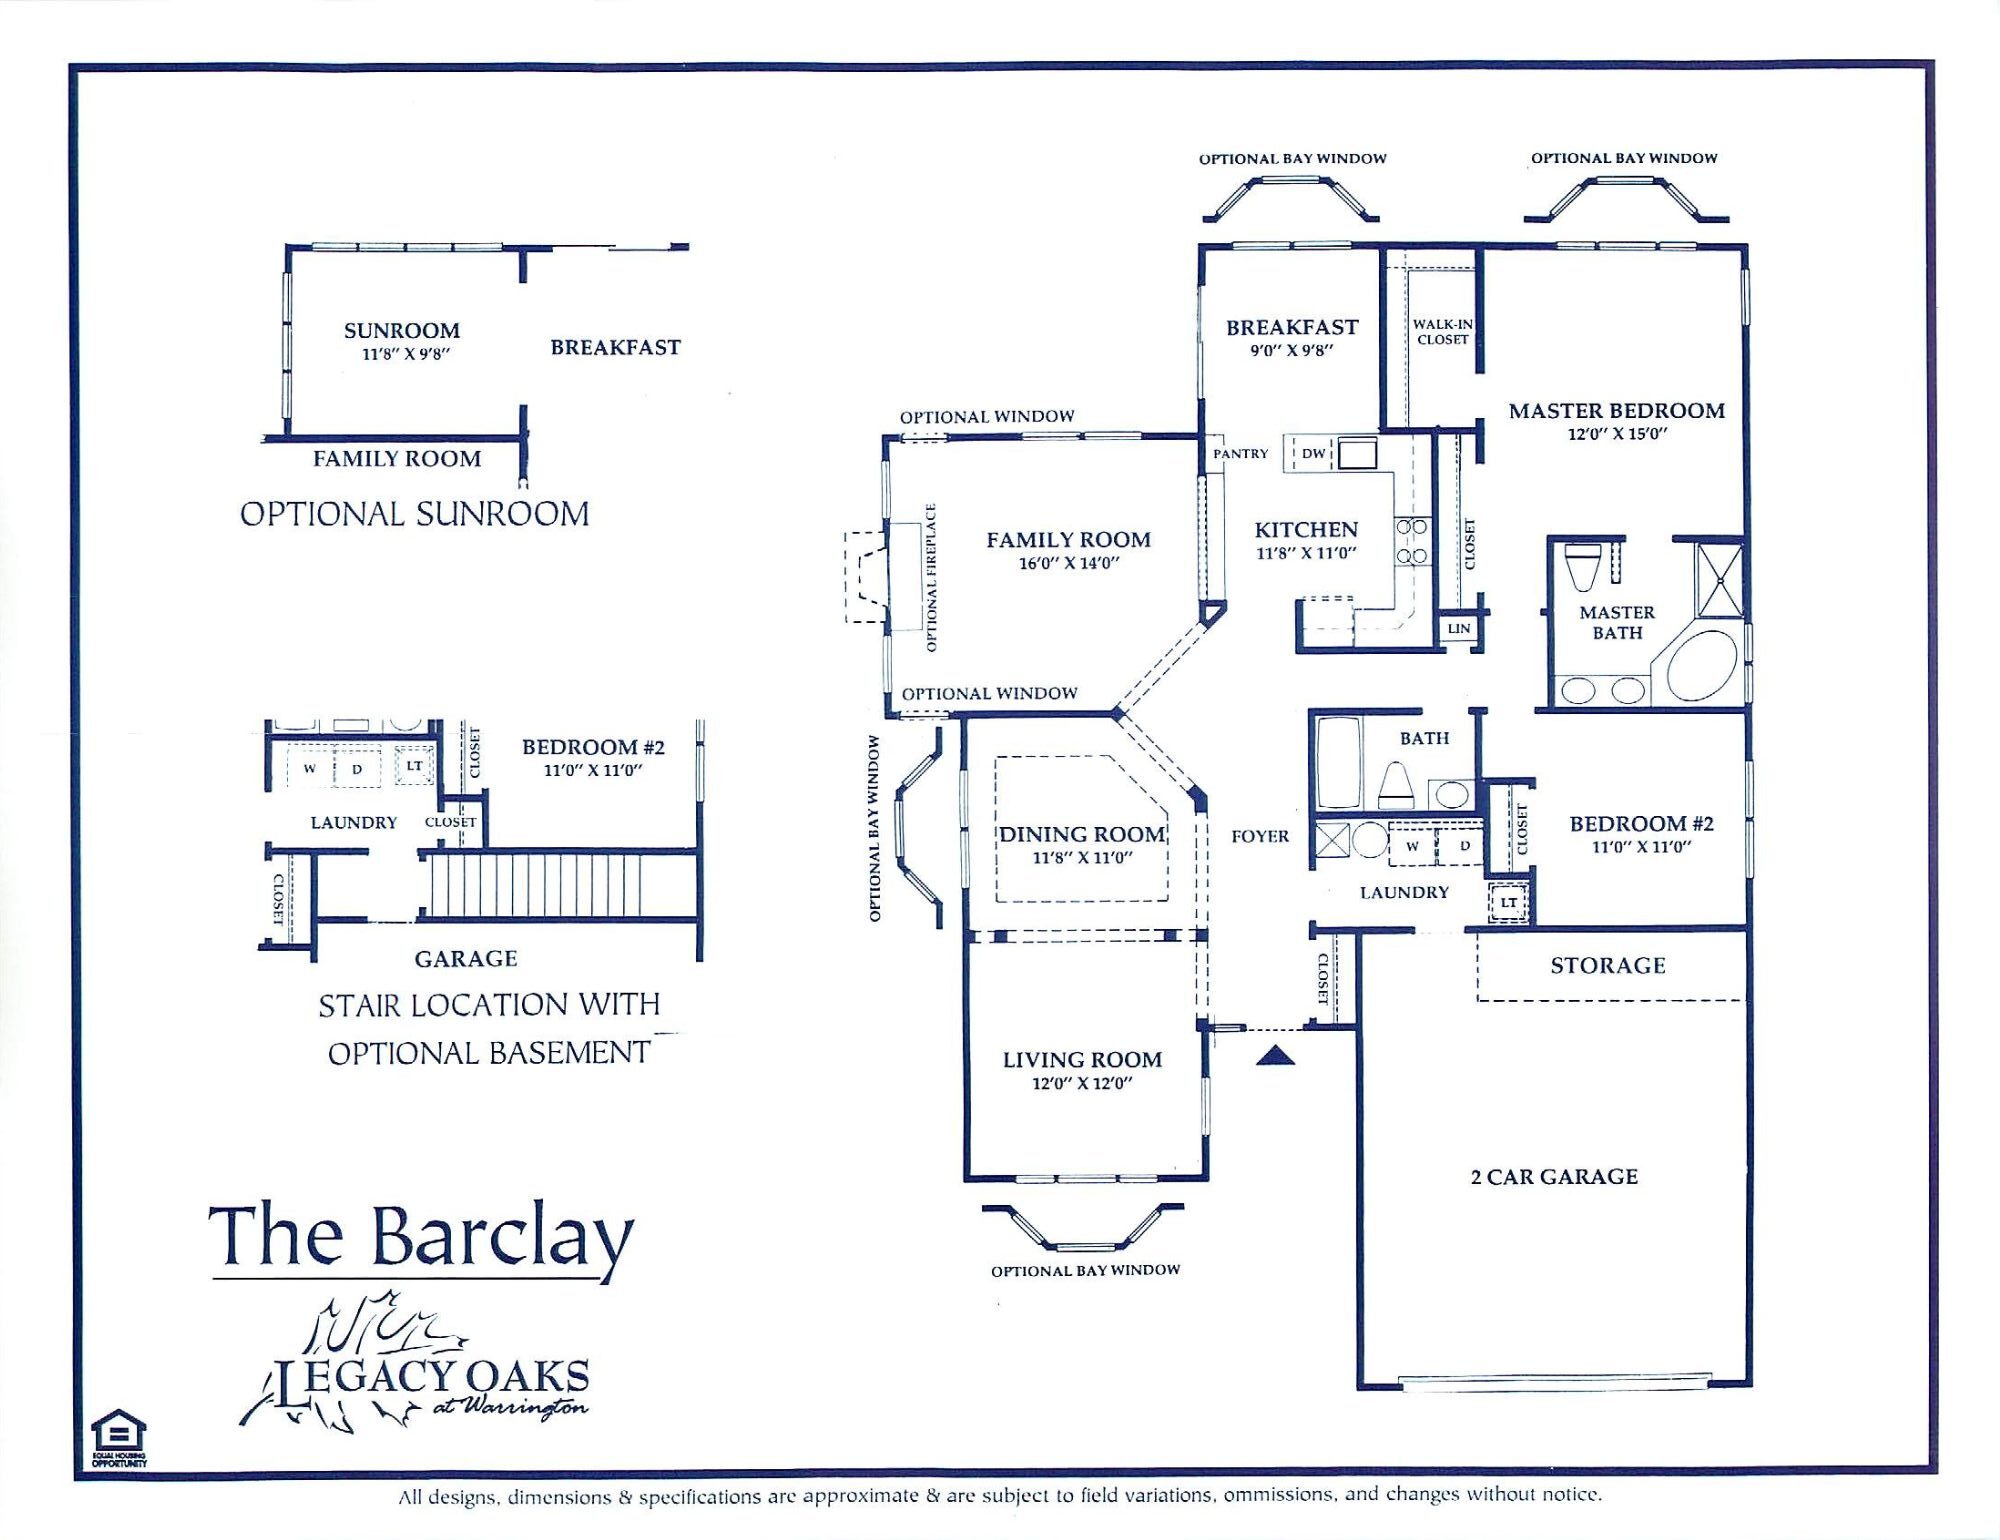 legacy oaks barclay floor plan2A